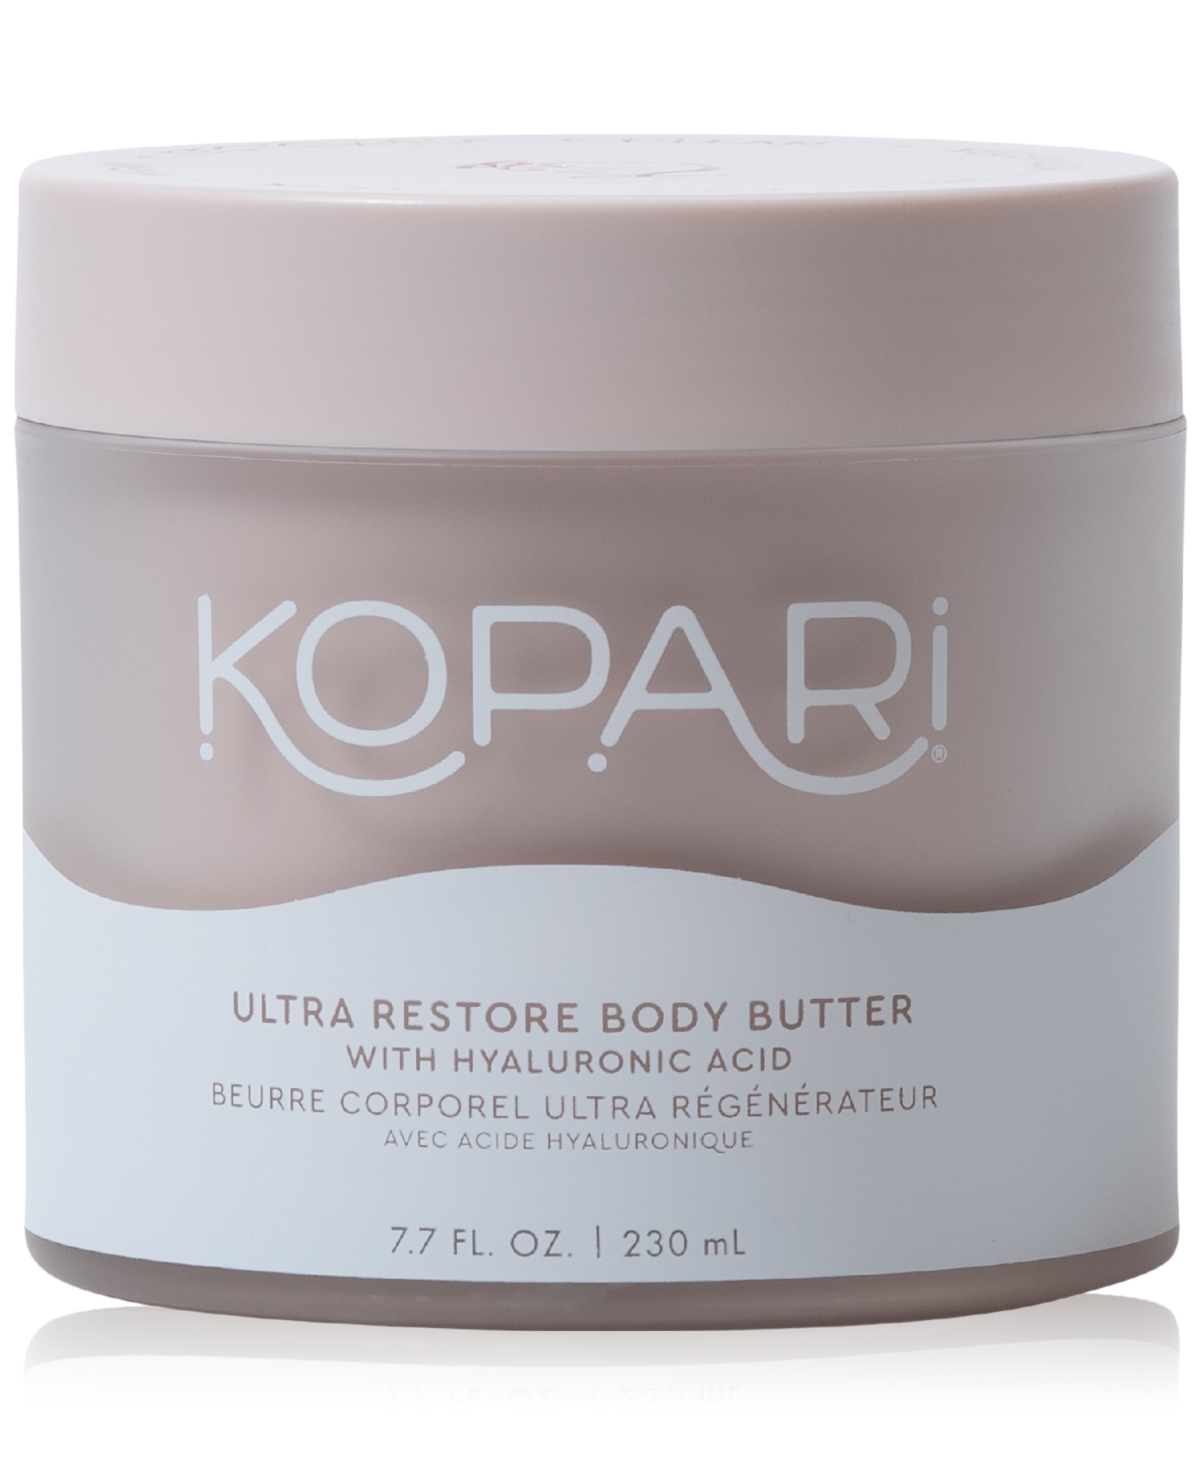 Kopari Beauty Ultra Restore Body Butter, 7.7 Oz.